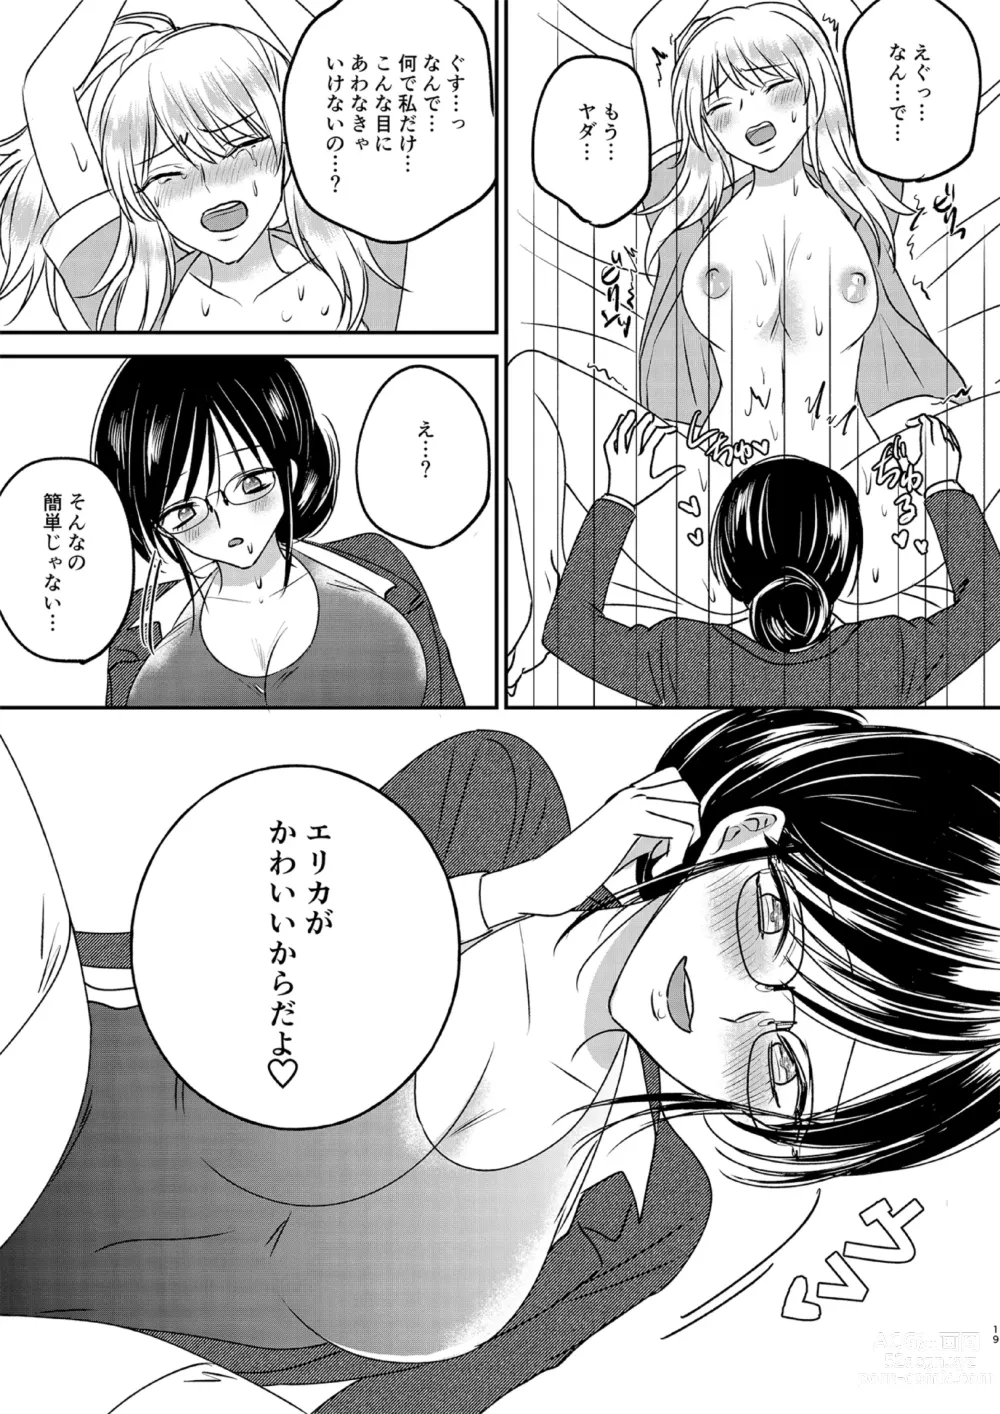 Page 19 of doujinshi Irekawari Cinderella 3